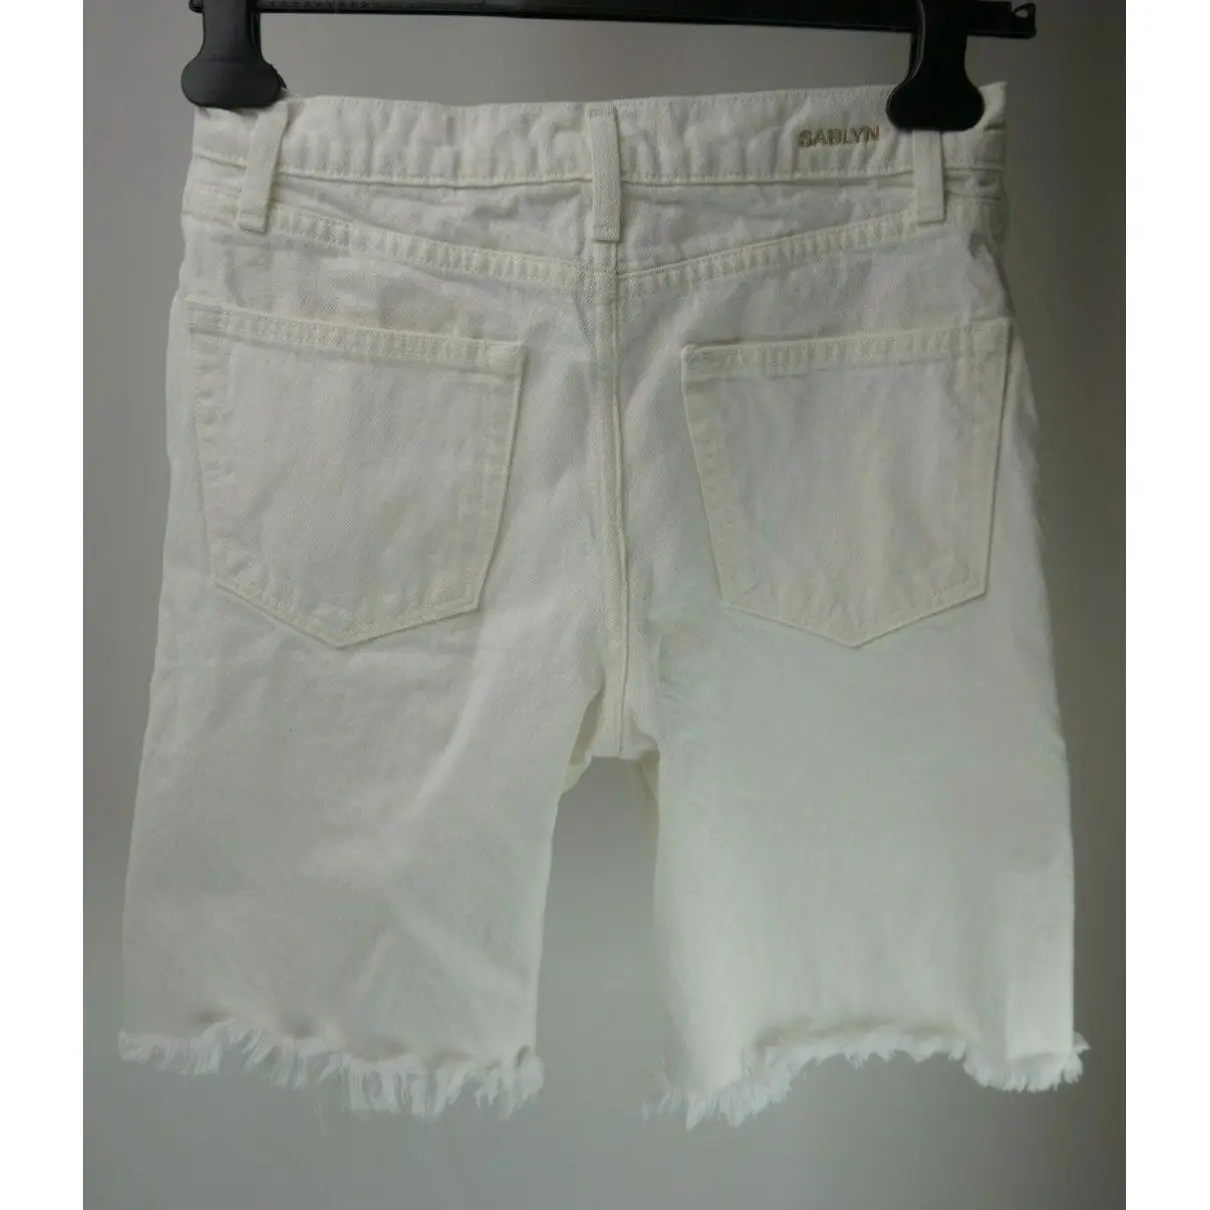 Buy SABLYN Shorts online